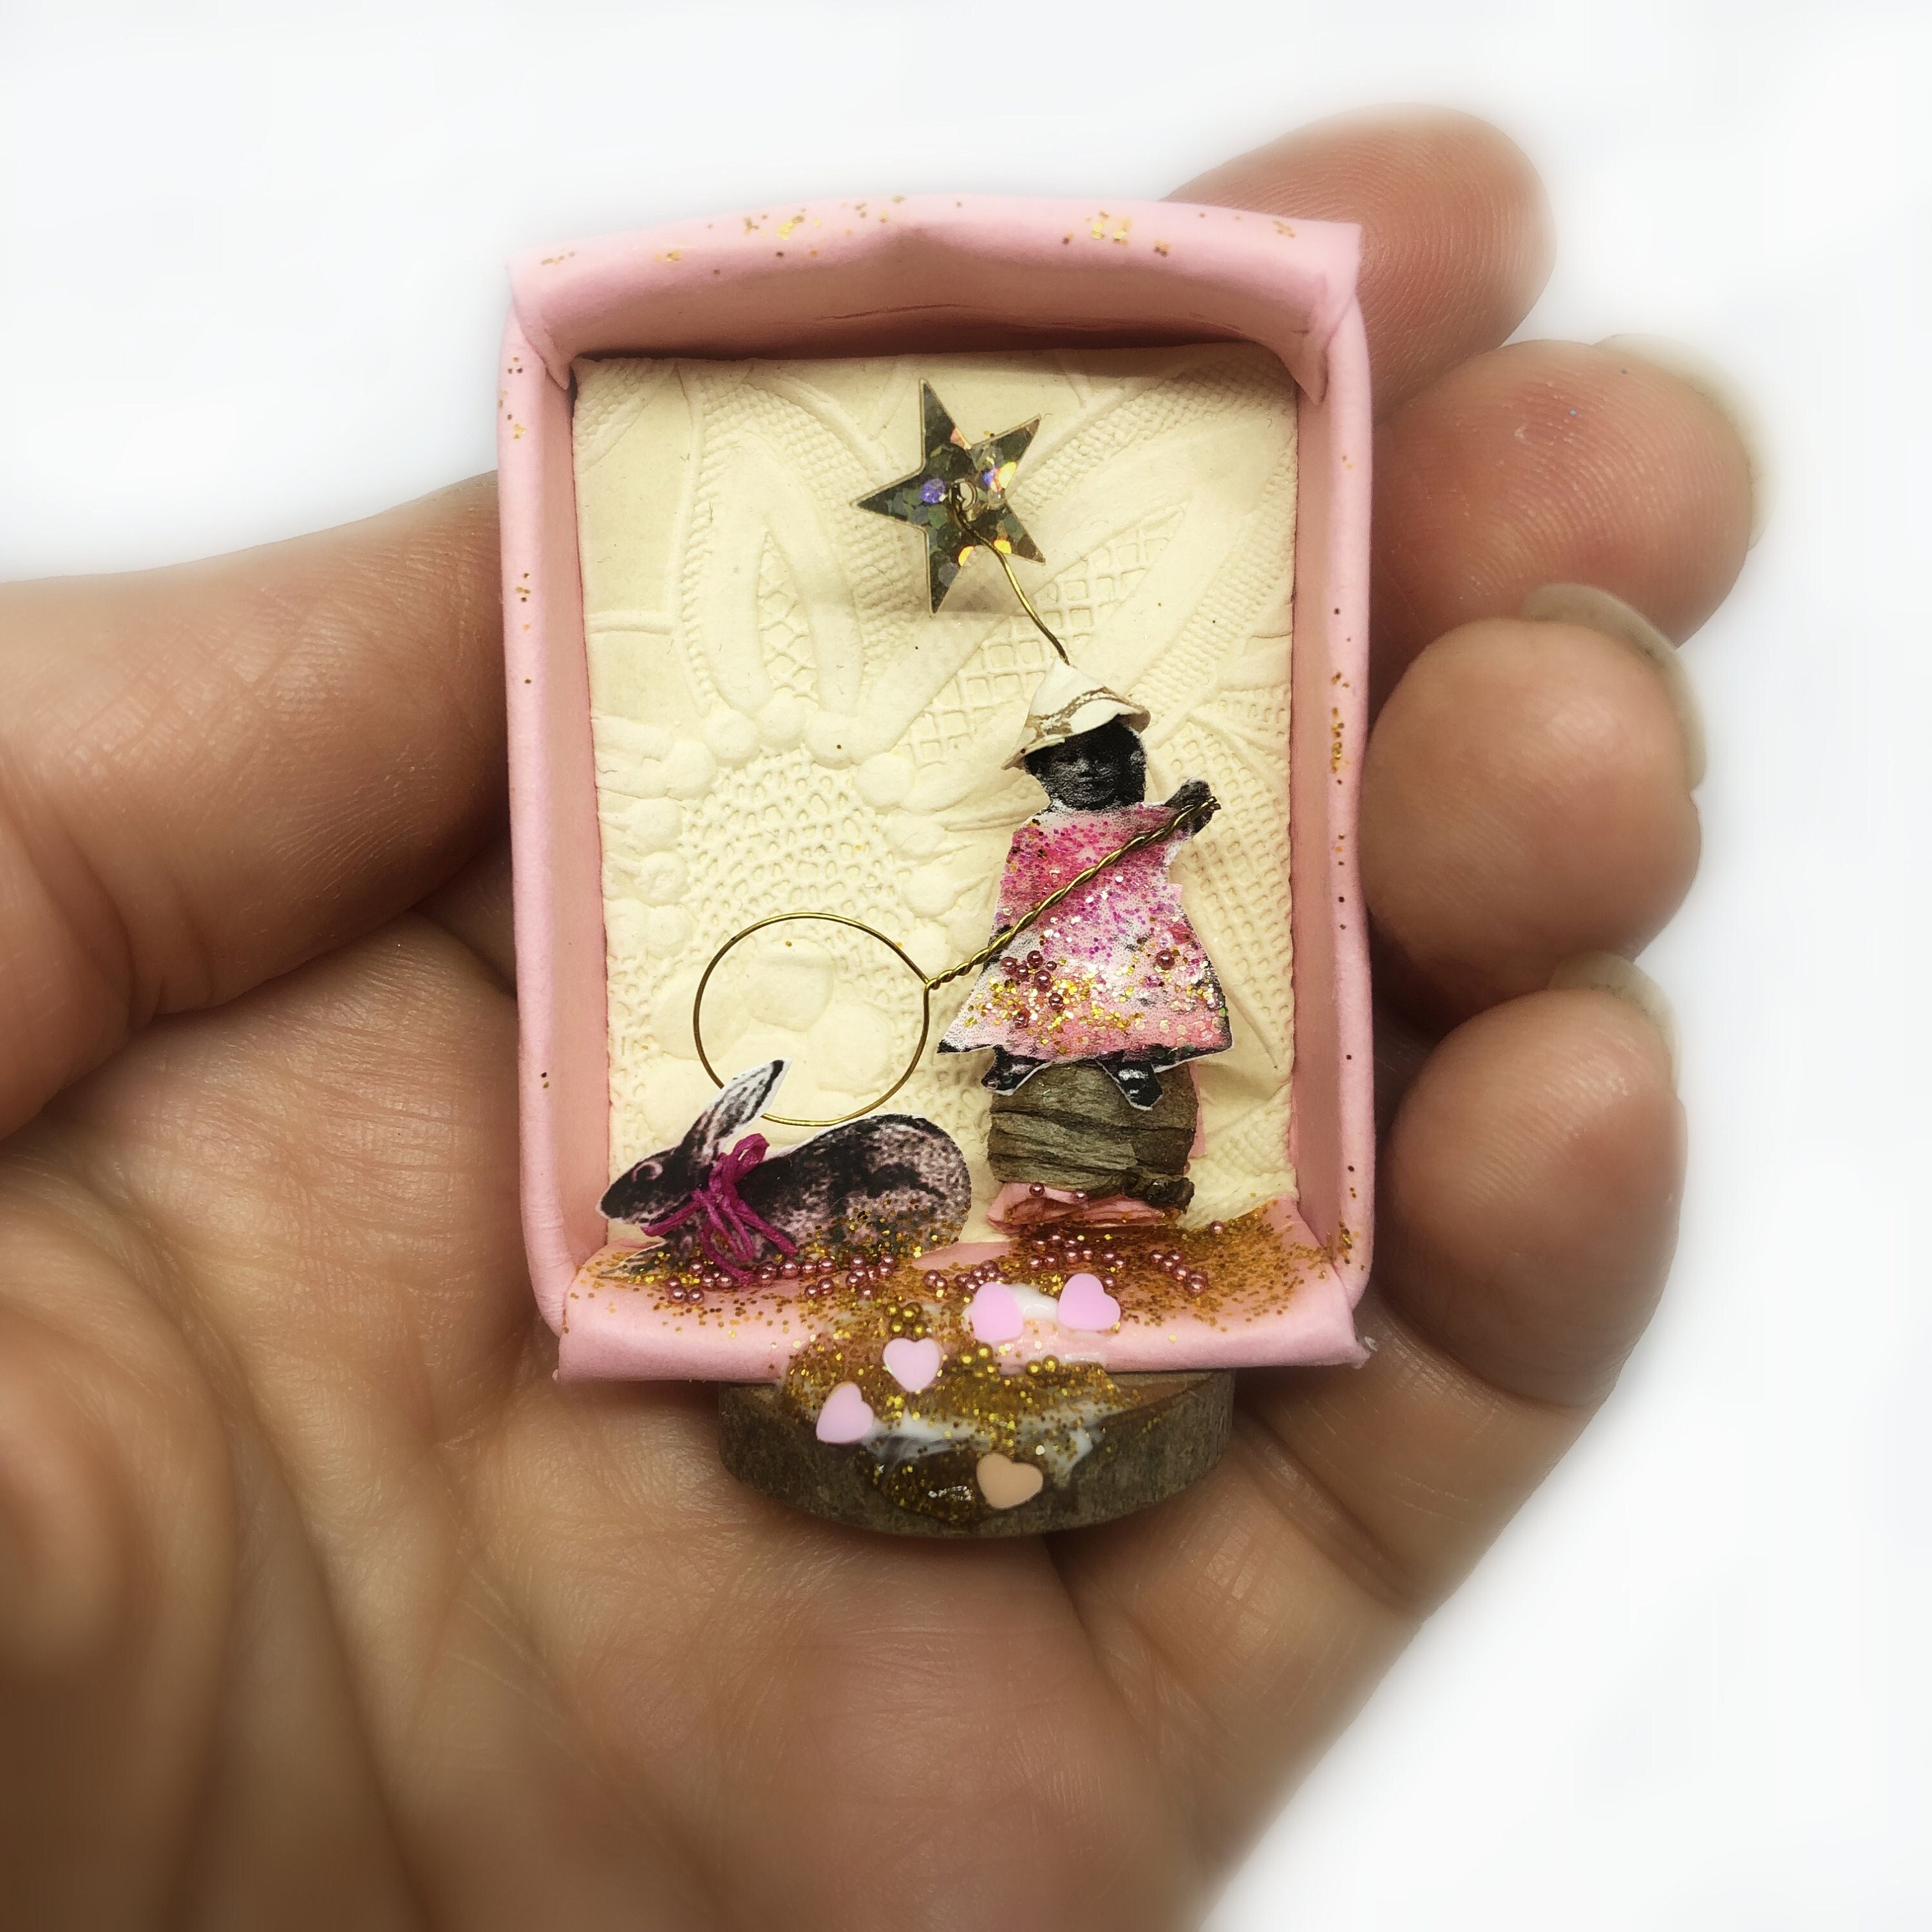 Diorama Miniature Cadeau Paques, Boite Lapin de Paques, Matchbox Art Rabbit Easter, Childhood Matchb